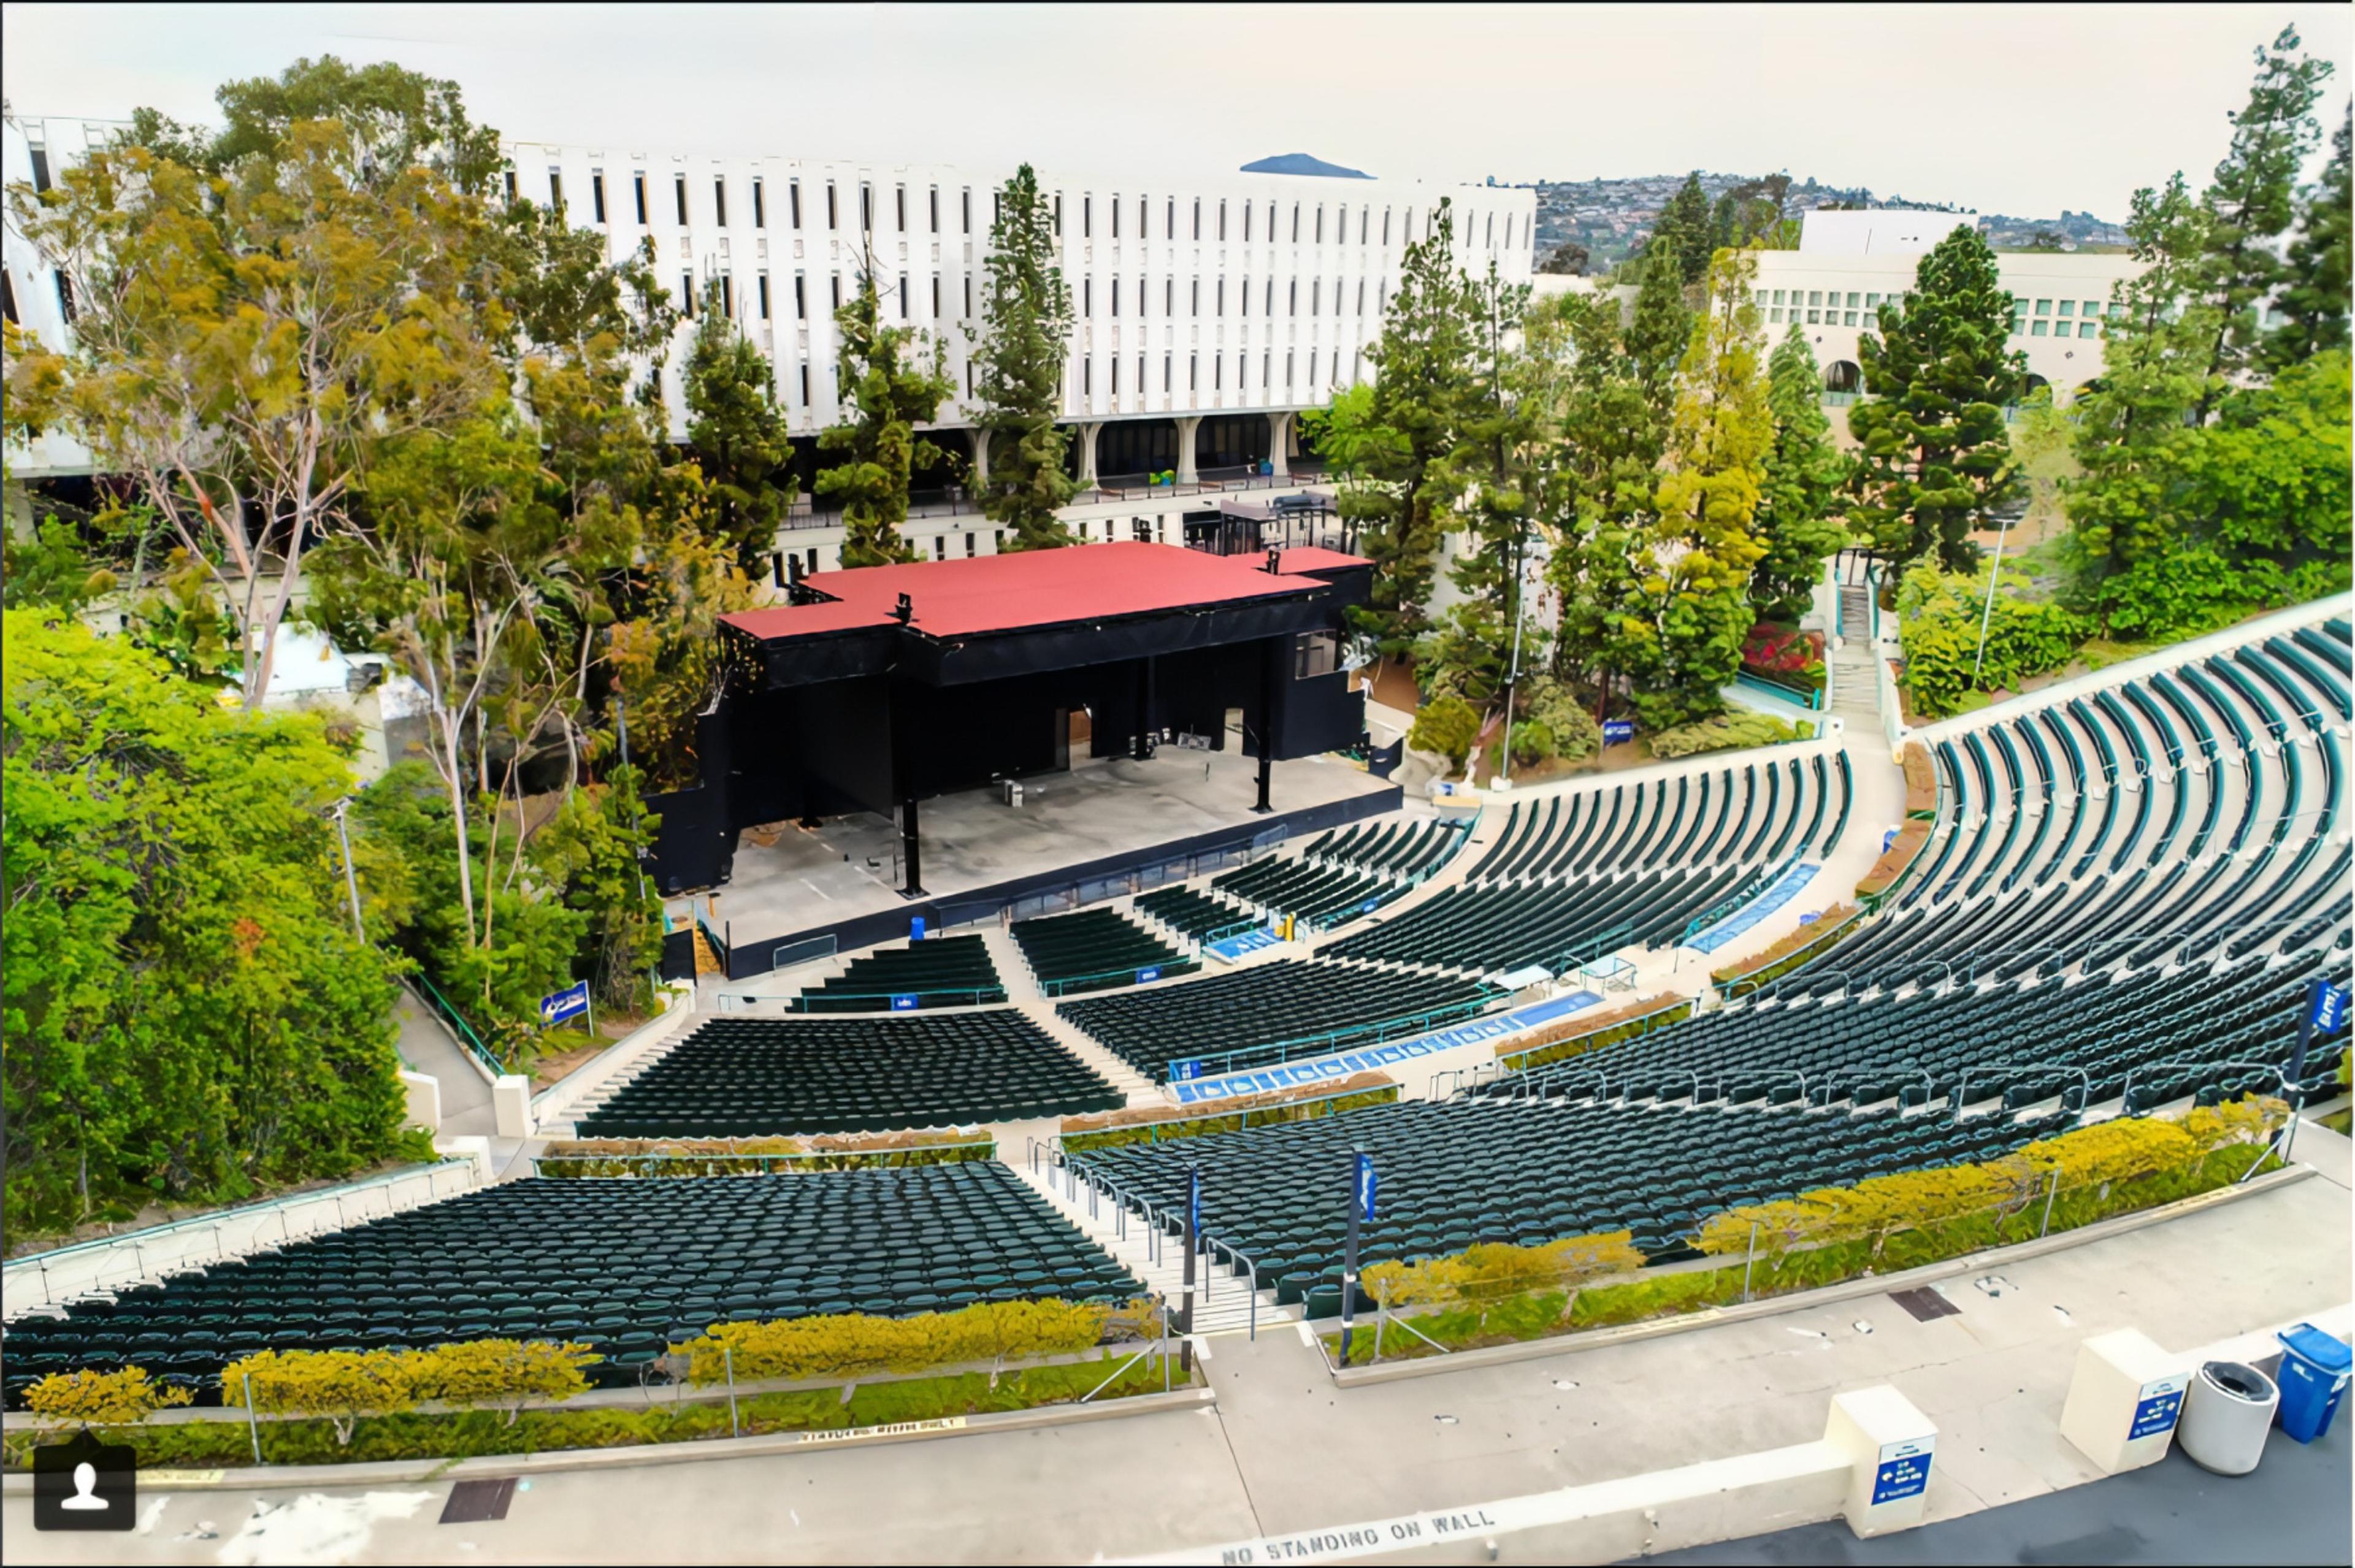 Cal Coast Credit Union Amphitheater